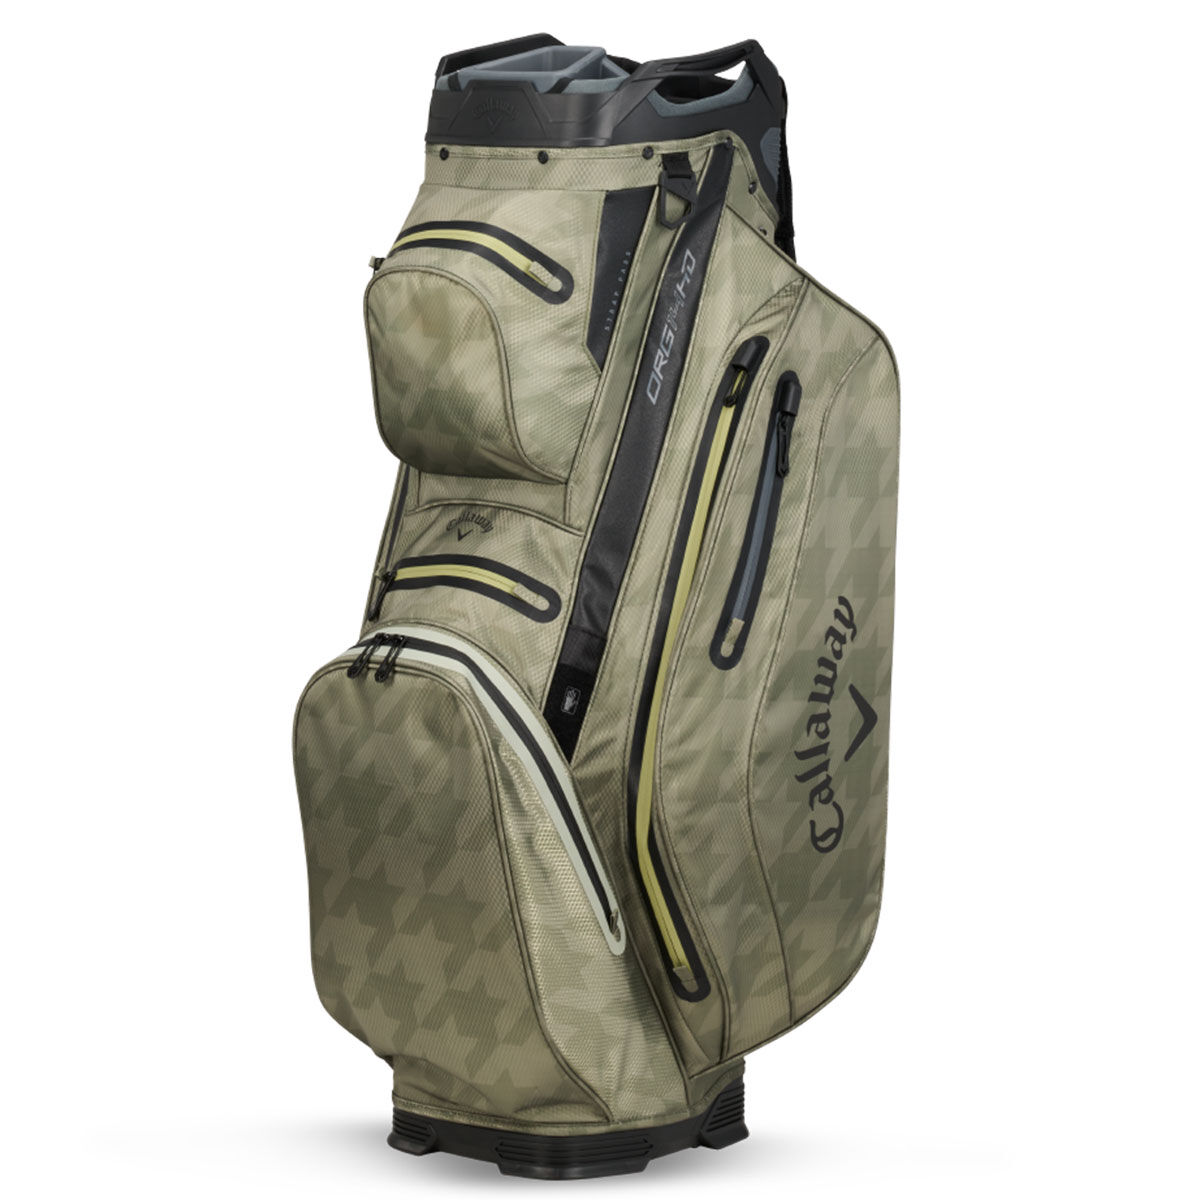 Callaway Org 14 HD Golf Cart Bag, Olive/houndstooth, One Size | American Golf von Callaway Golf